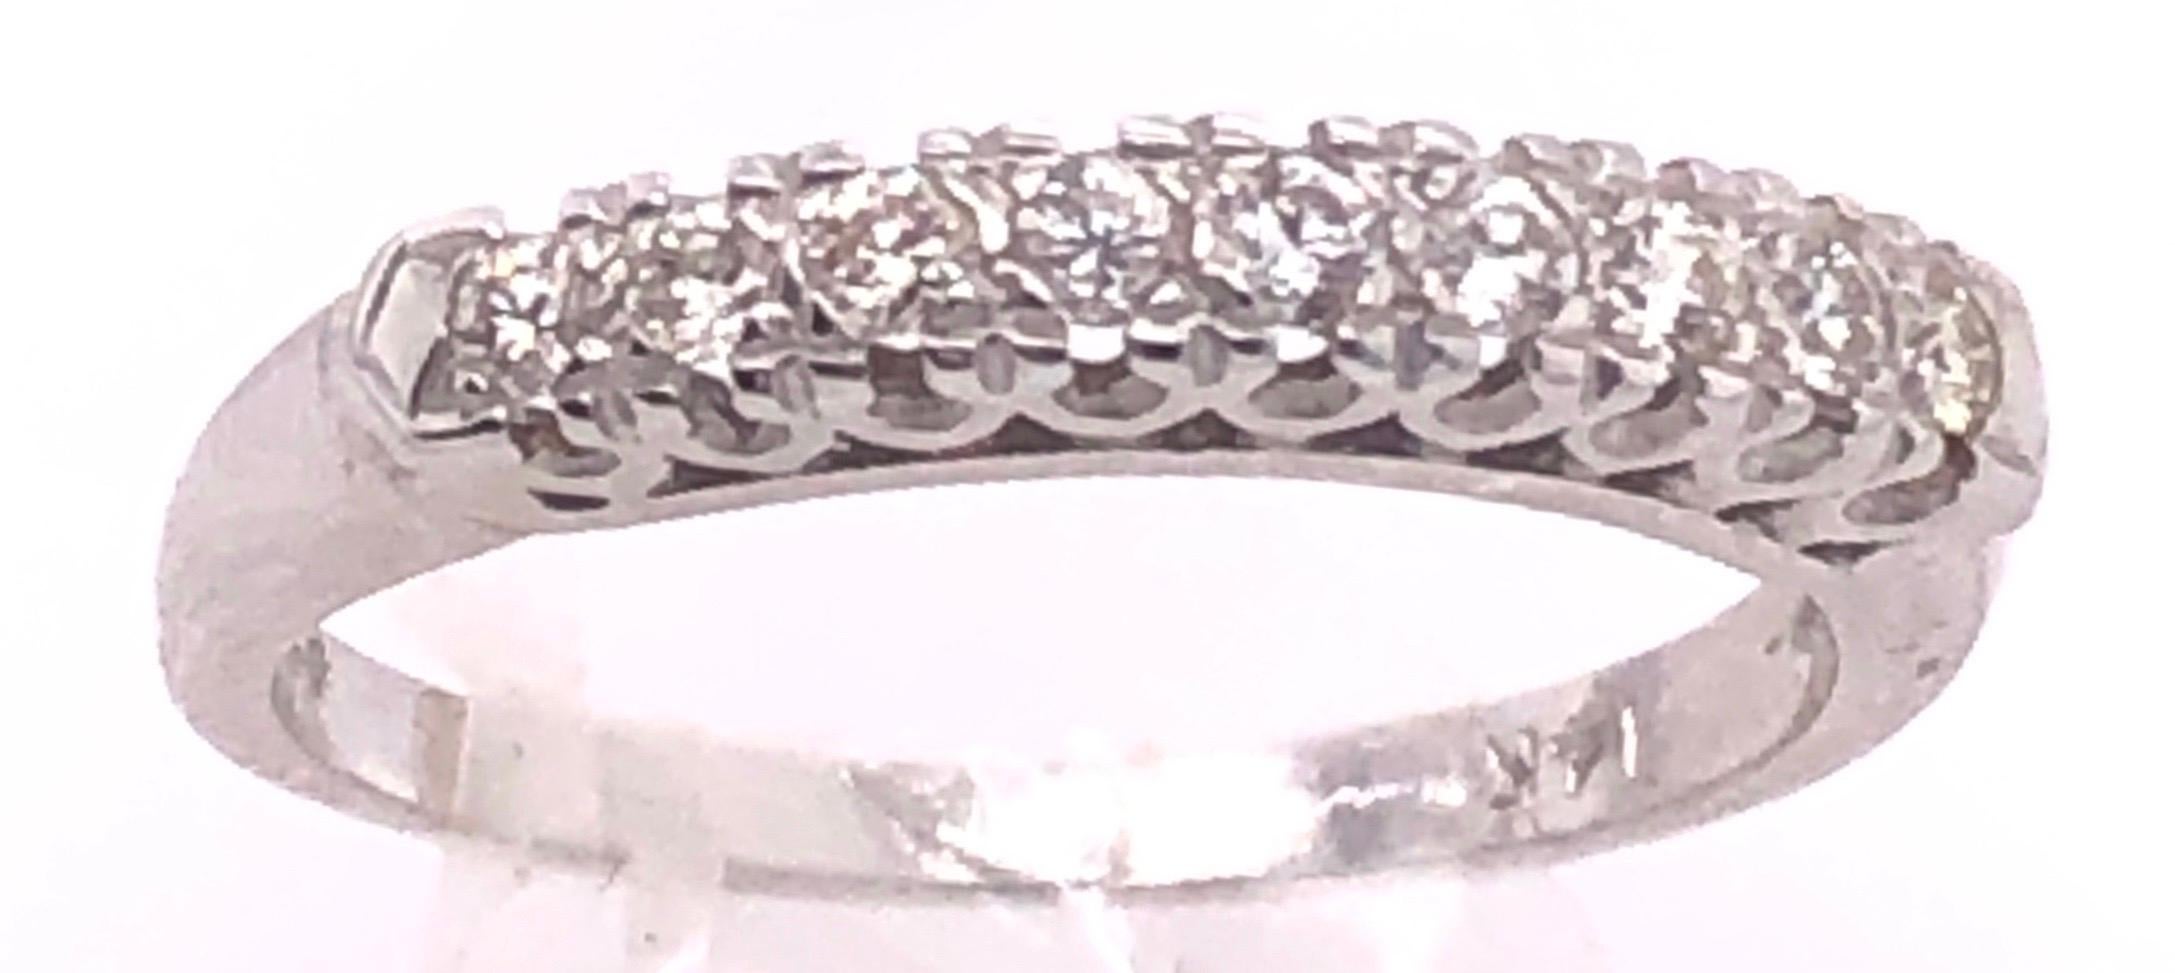 14 Karat White Gold Diamond Half Anniversary Bridal Ring / Wedding Band
0.27 total diamond weight.
Size 5.5 with 2.0 grams total weight